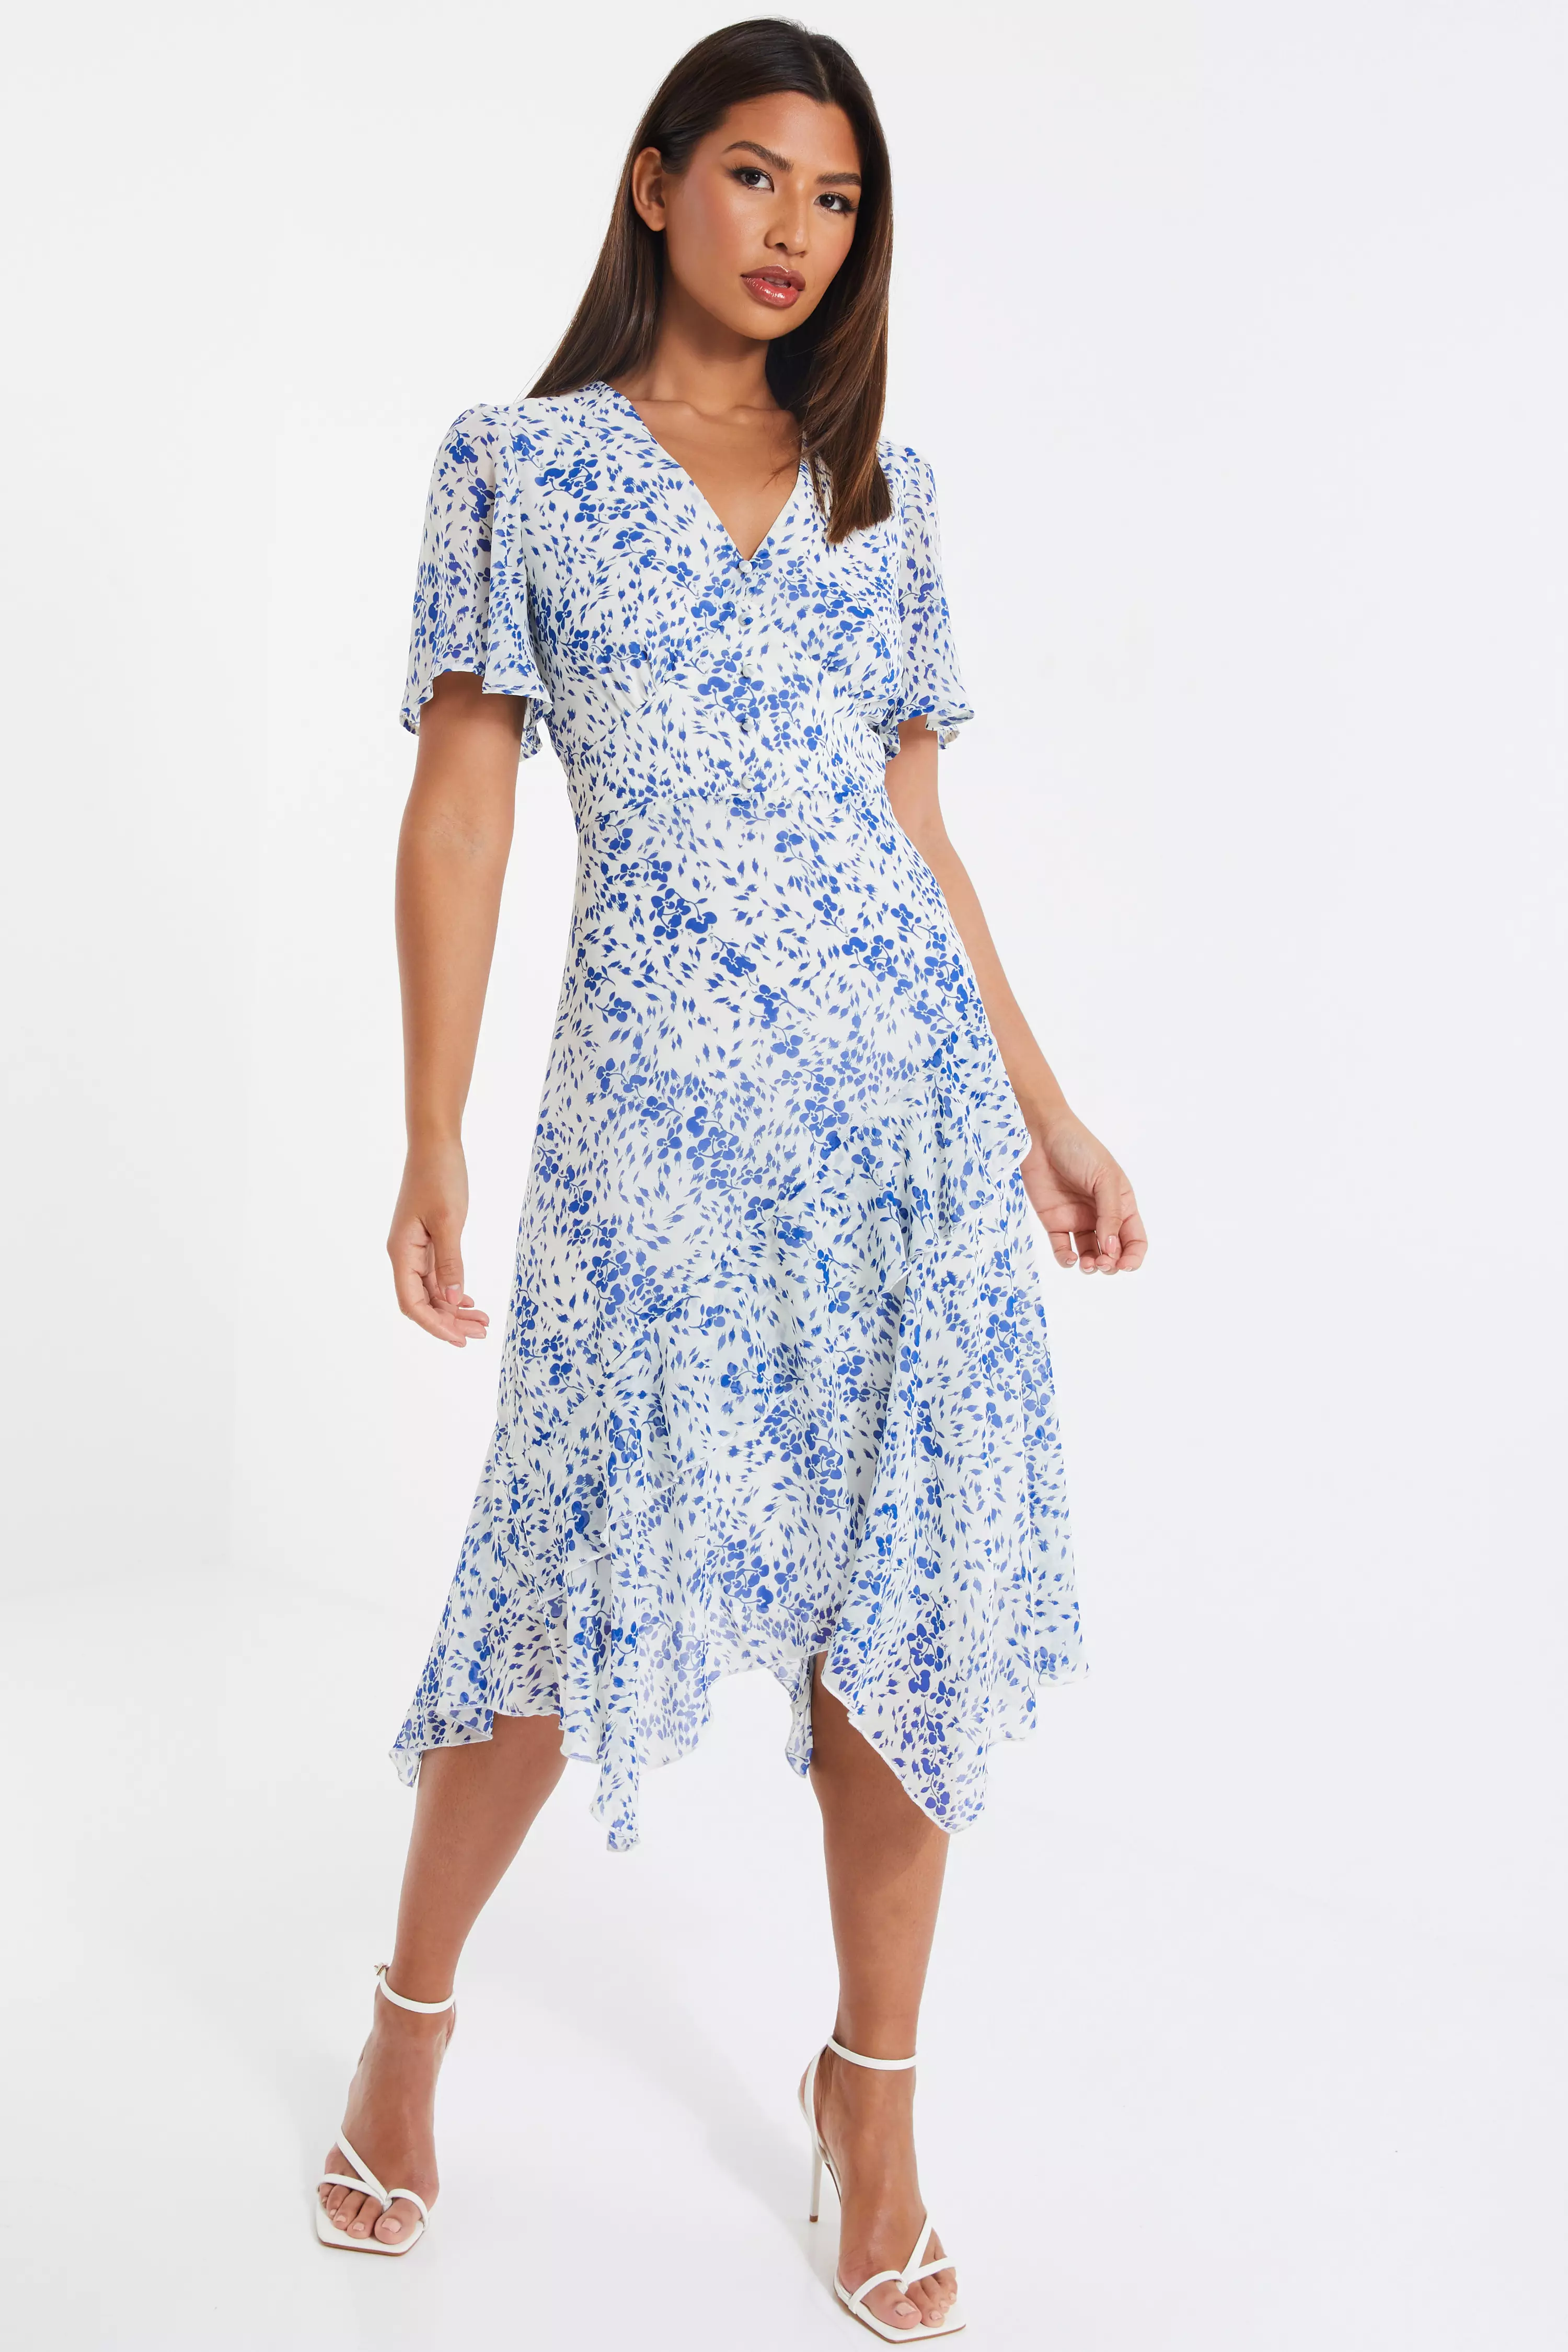 Blue Chiffon Floral Frill Midi Dress - QUIZ Clothing